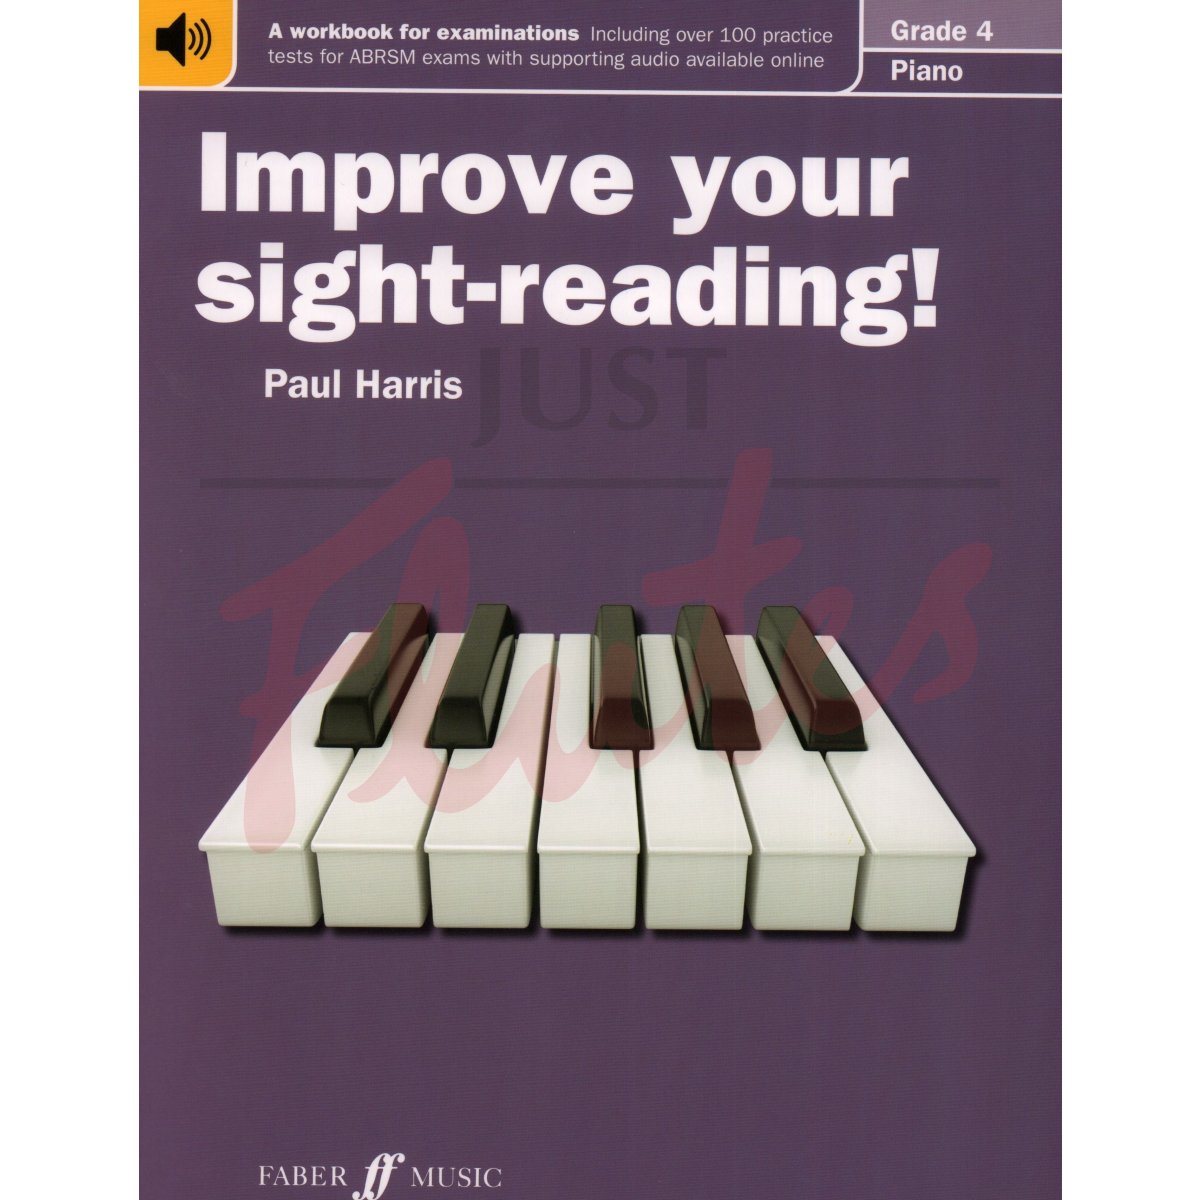 Improve Your Sight-Reading! [Piano] Grade 4